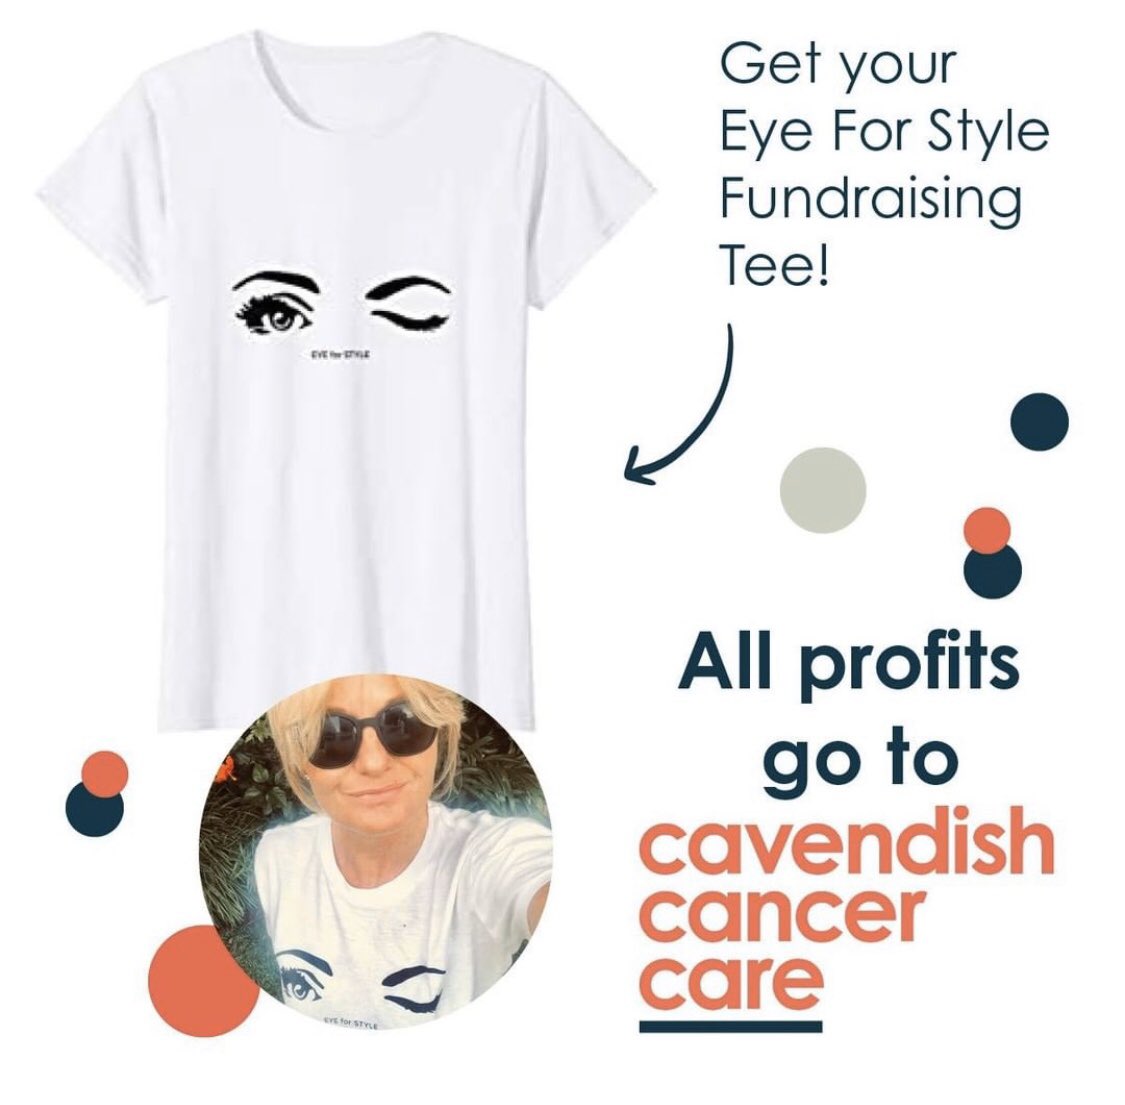 We are fundraising for the amazing @CavCancerCare ❤️ 
Shop yours.... 
charlielilly.co.uk/eyeforstyle

#style #fashion #fundraising